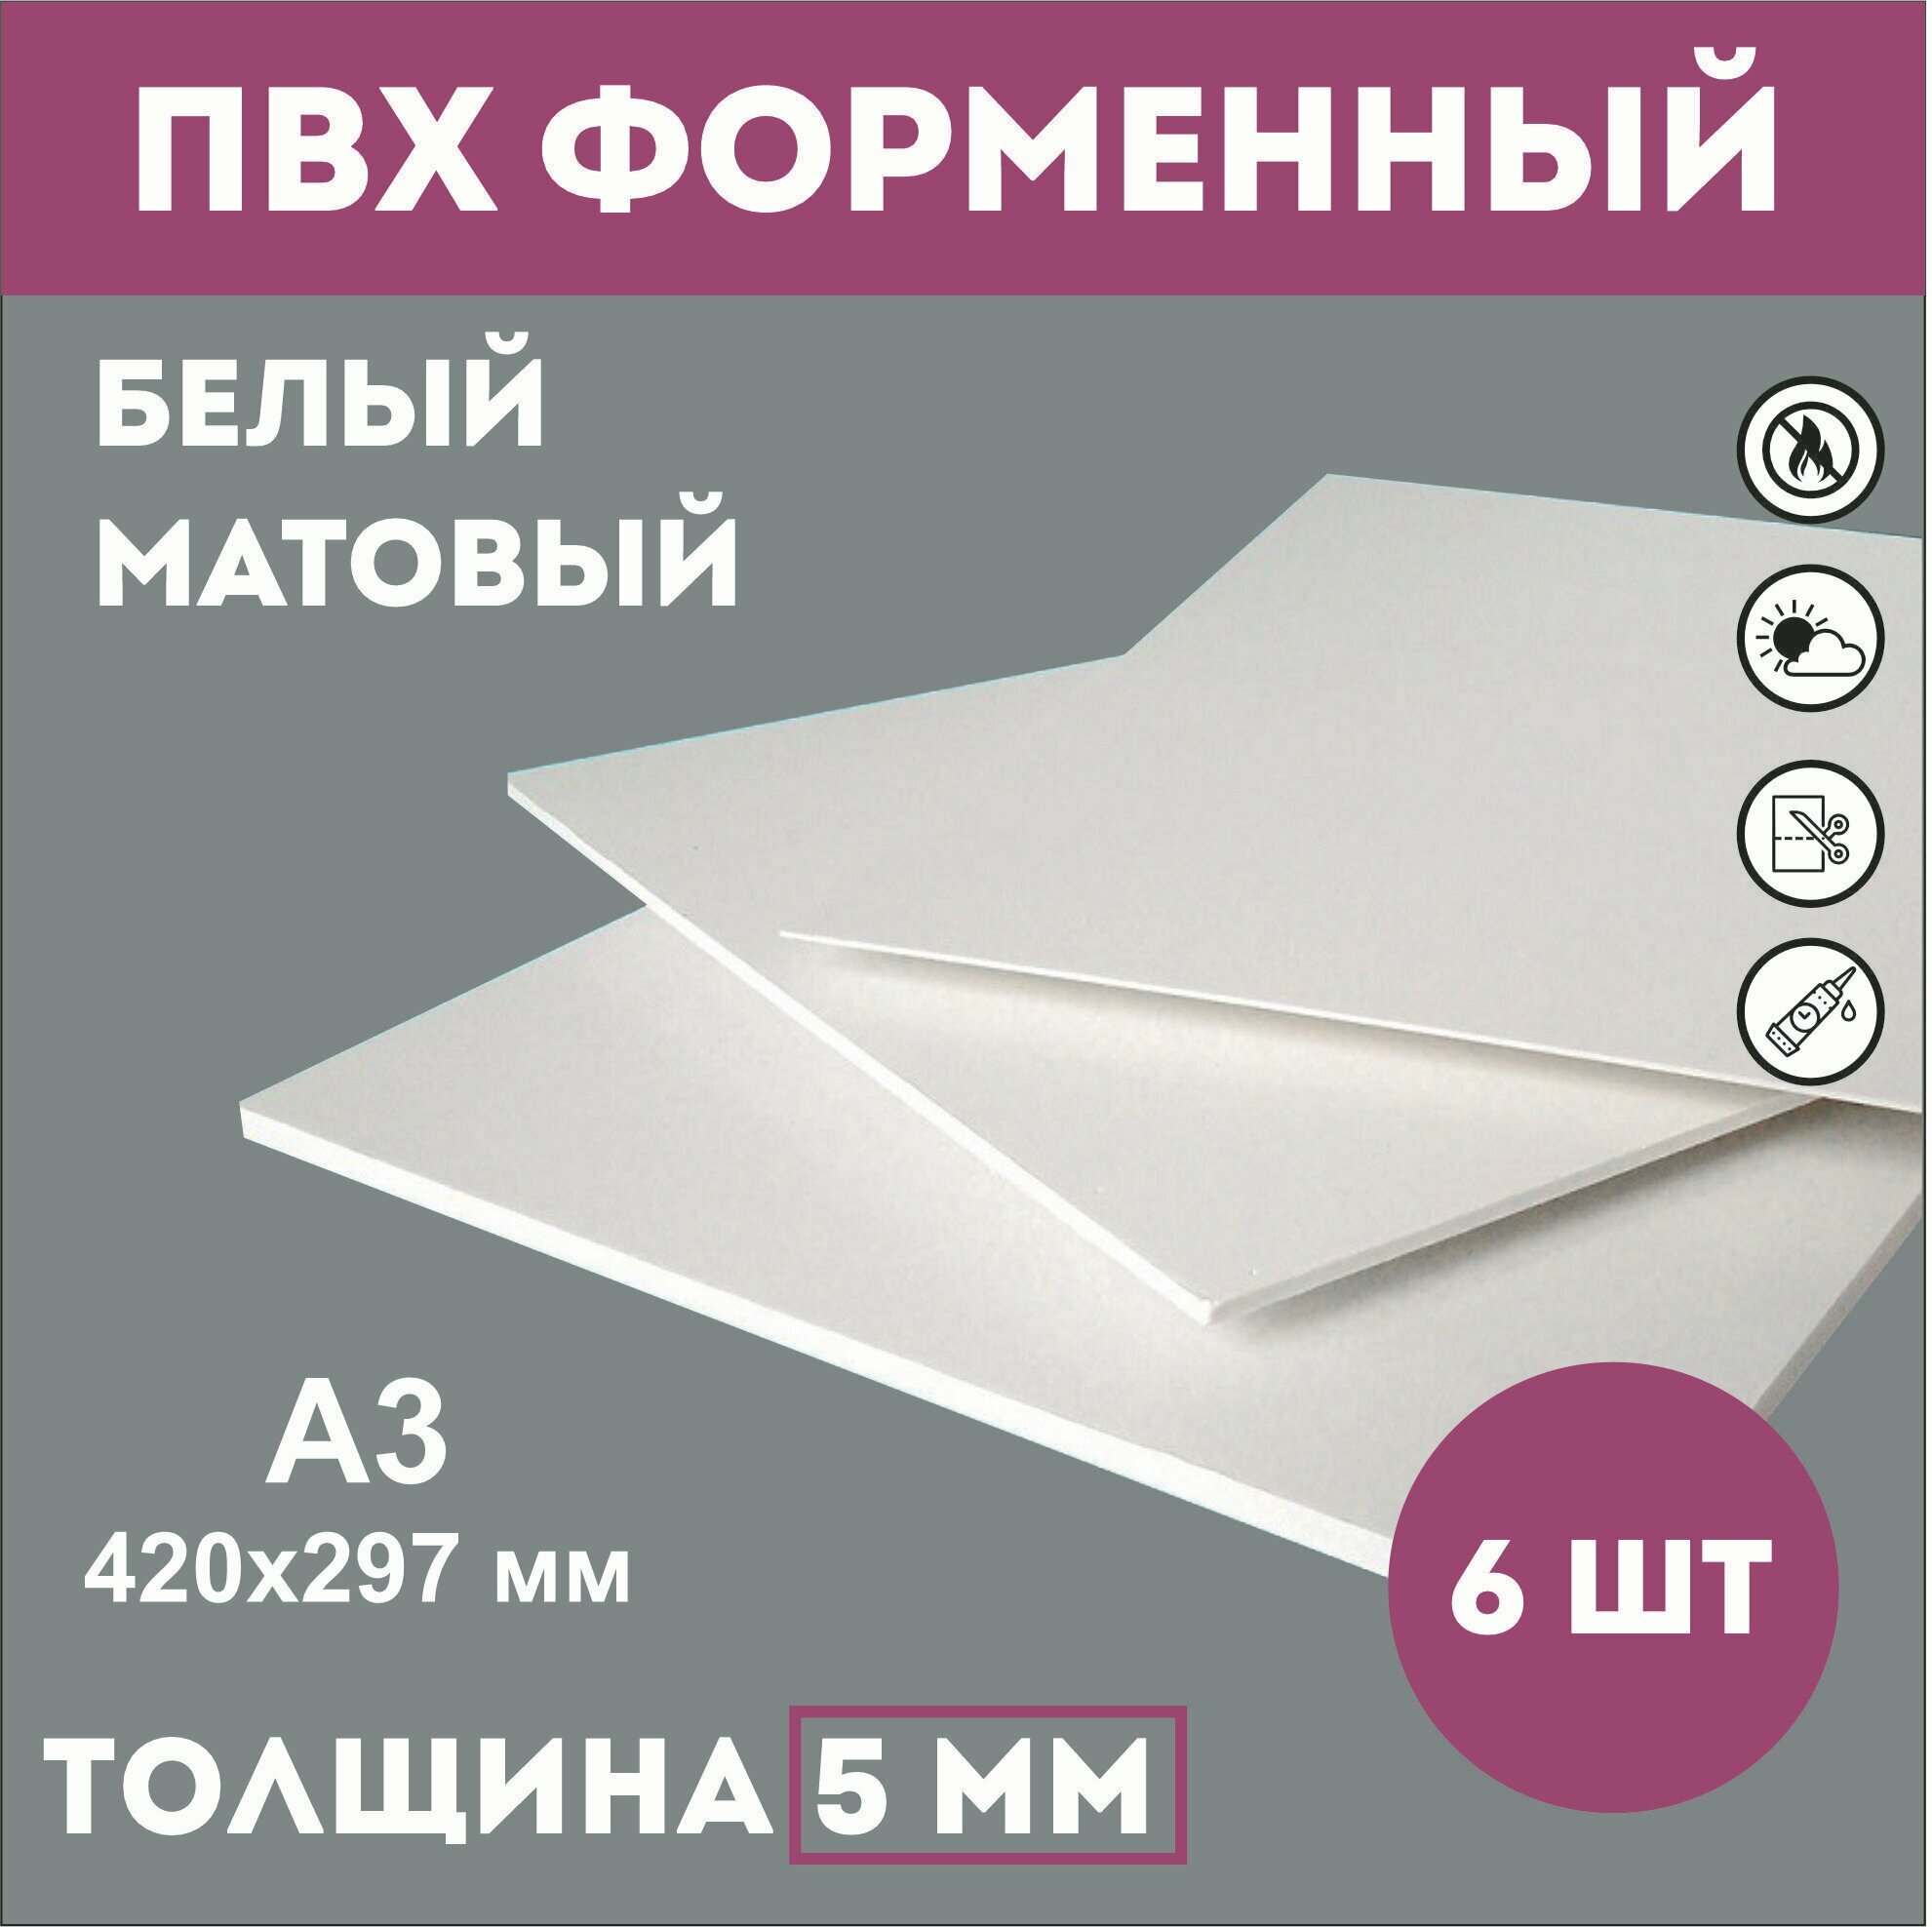 Заготовки для поделок из ПВХ пластика белого цвета 5 мм, А3 420мм-297мм 6 шт